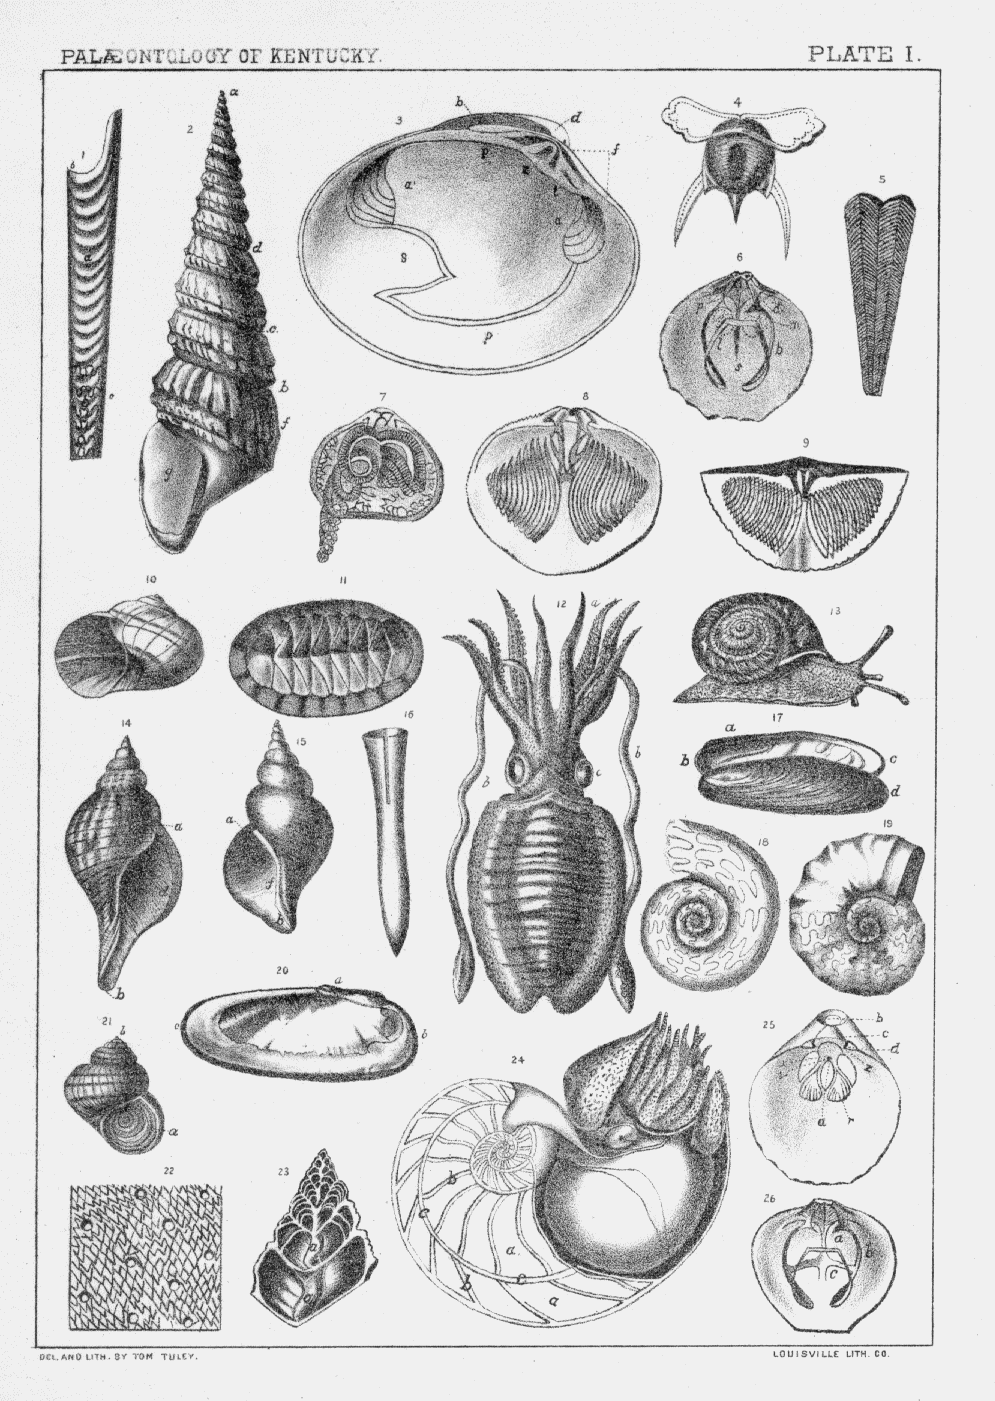 Lithographic Plates from Kentucky Fossil Shells, cephalopod, pelecypod, pteropod, cnidarian, brachiopod, gastropod